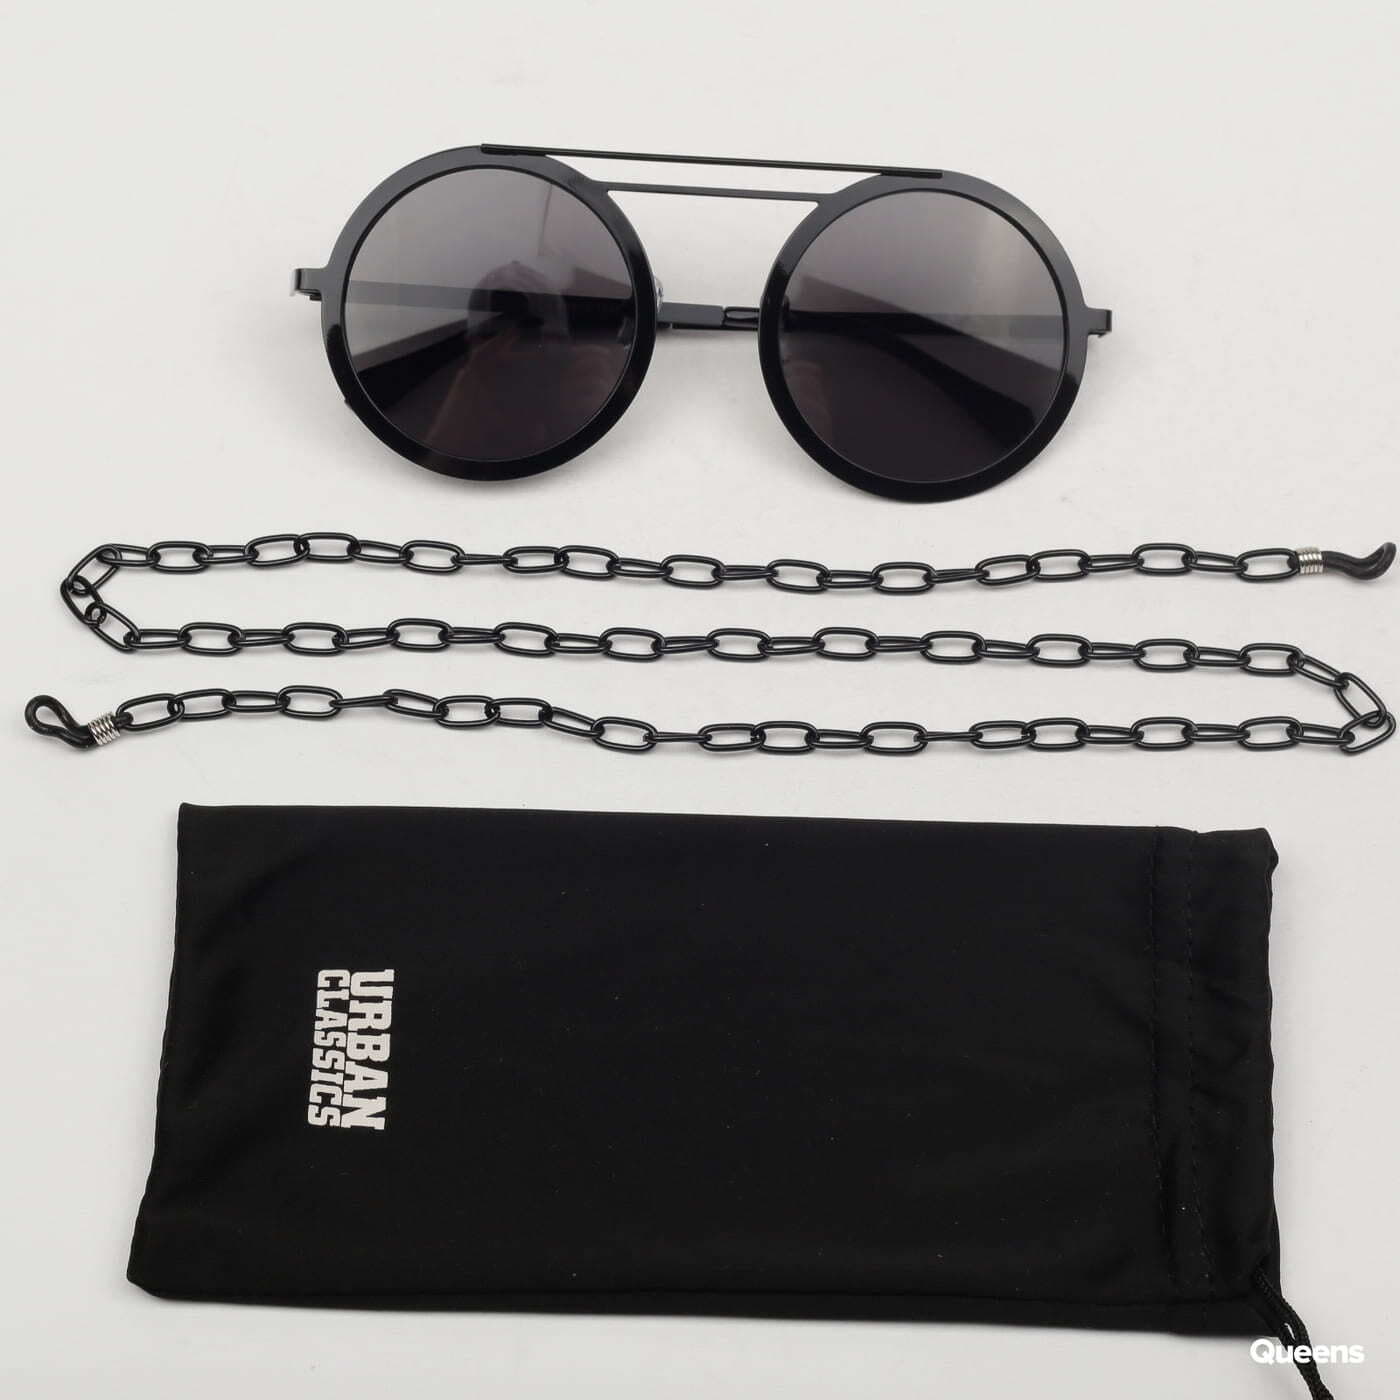 Sunglasses Chain Queens Black Urban Classics 104 | Sunglasses